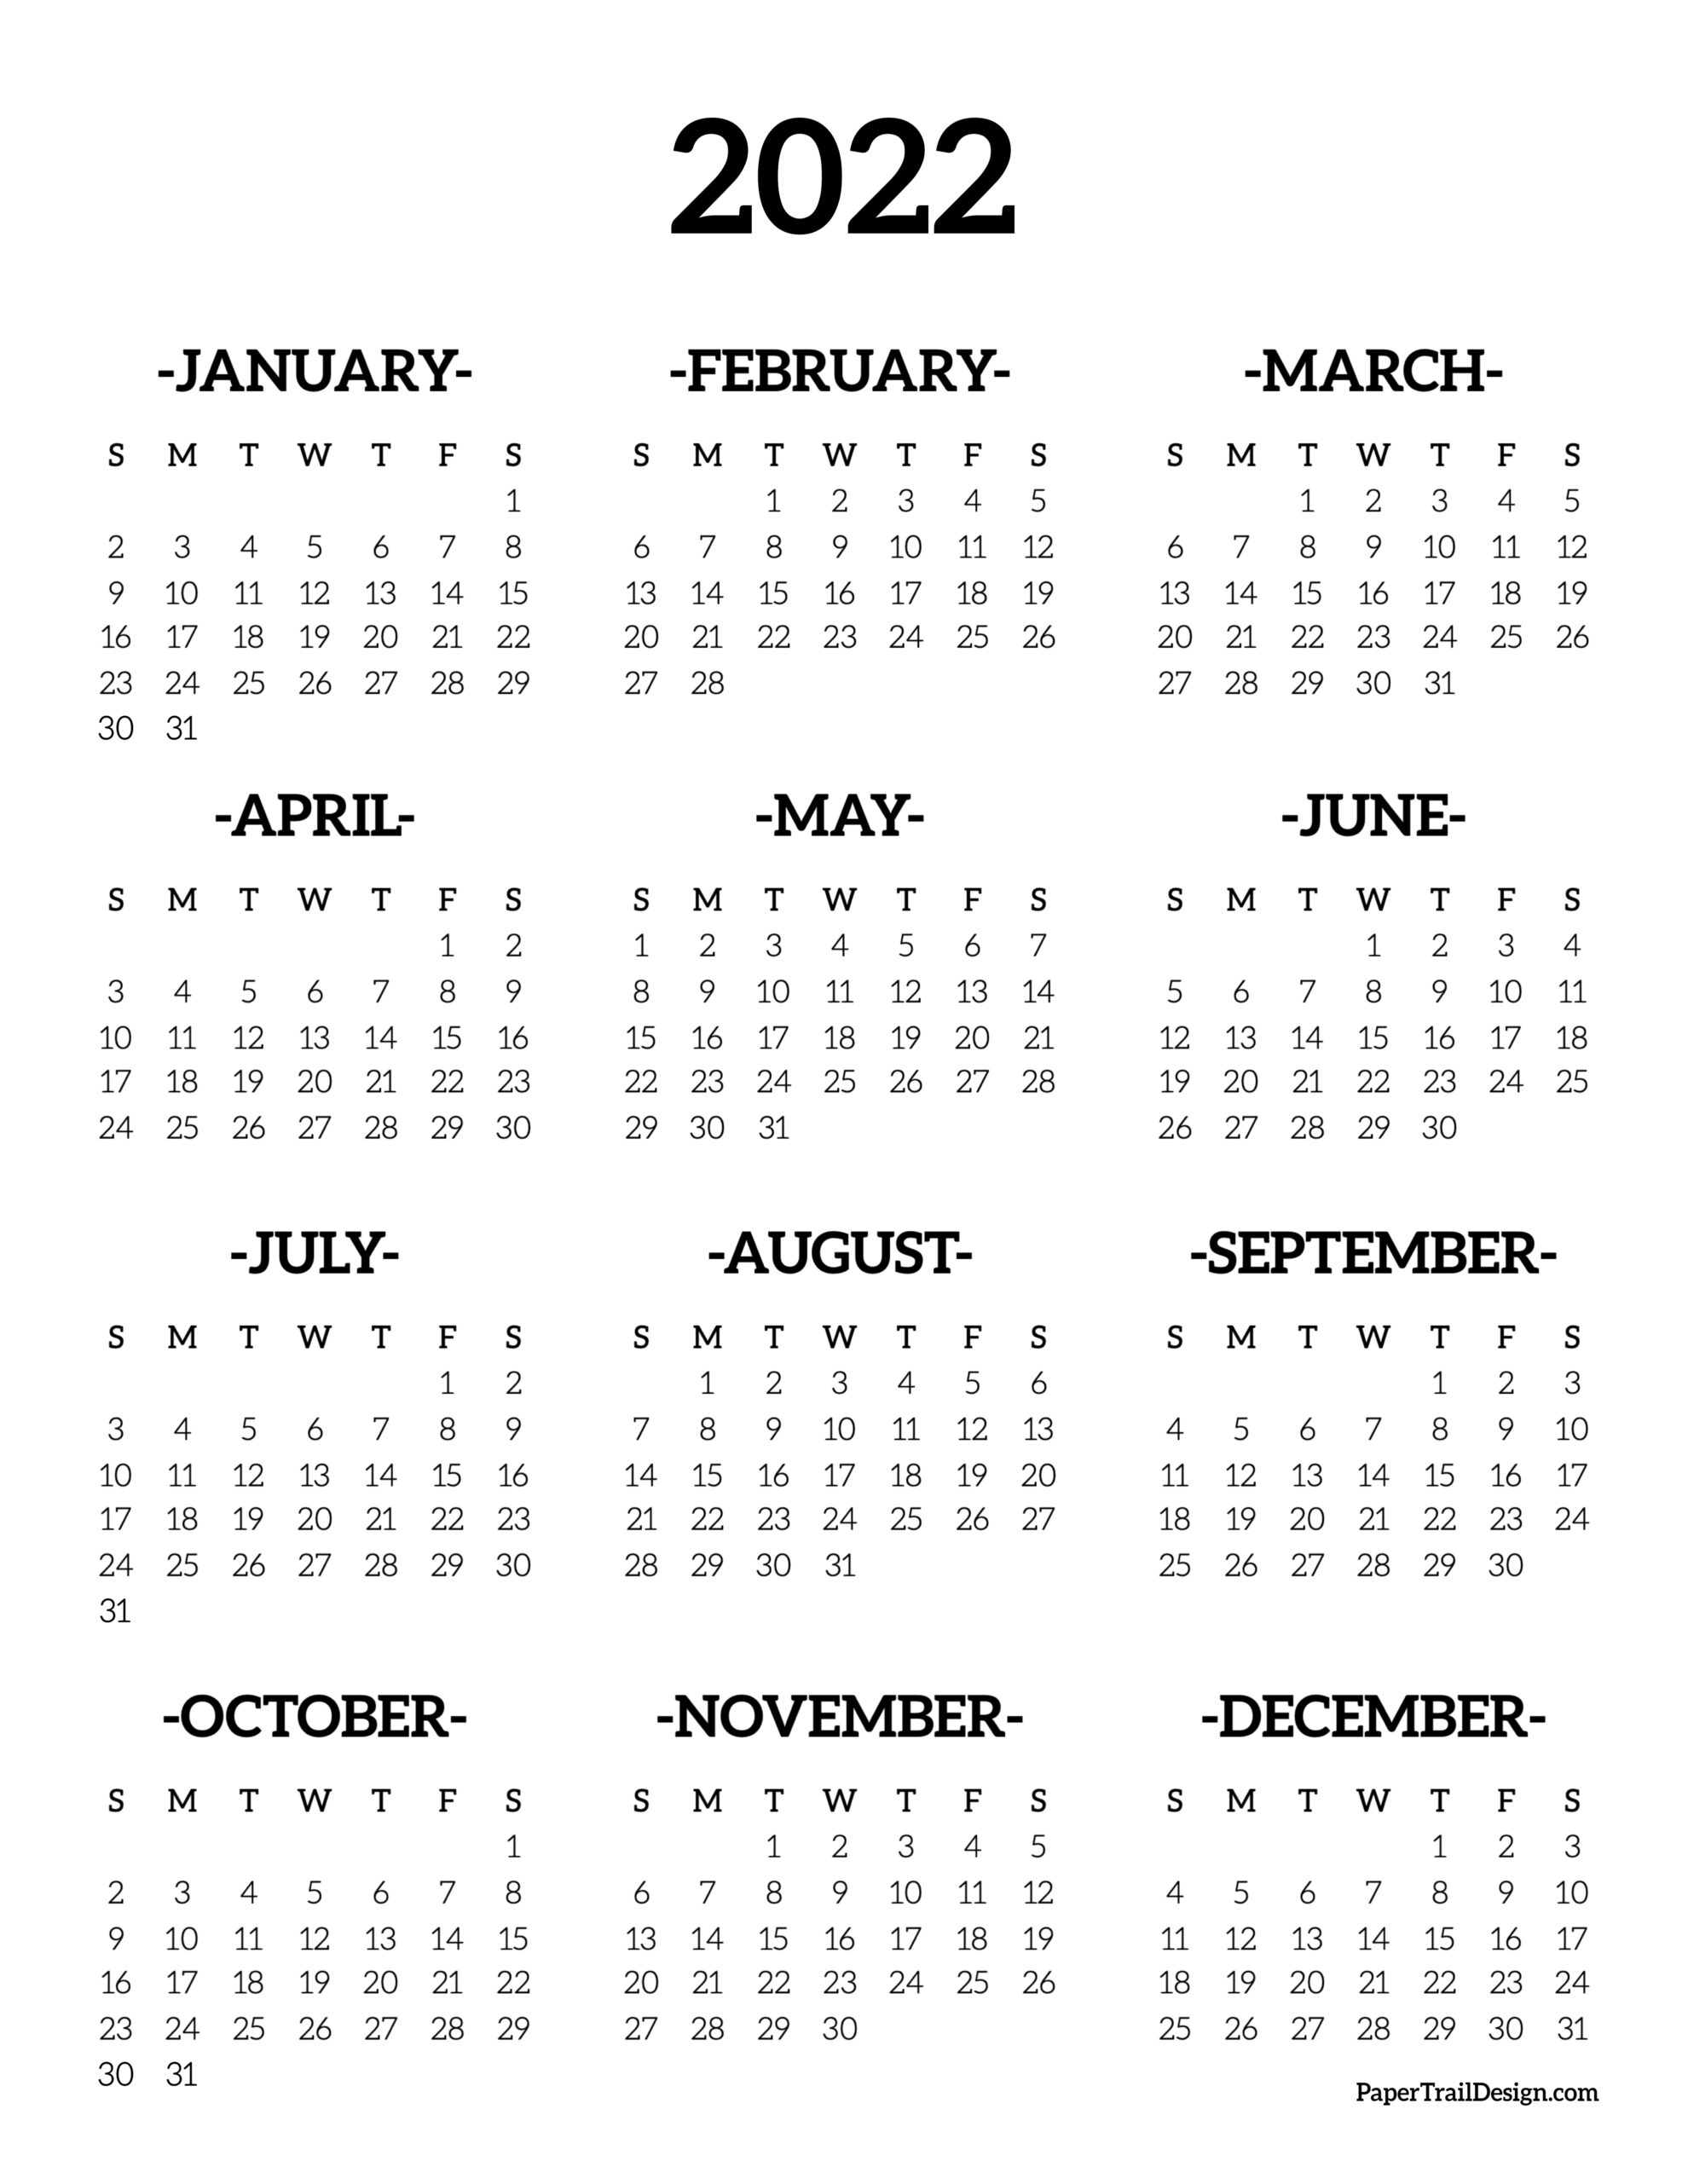 Full Year 2022 Calendar Calendar 2022 Printable One Page - Paper Trail Design